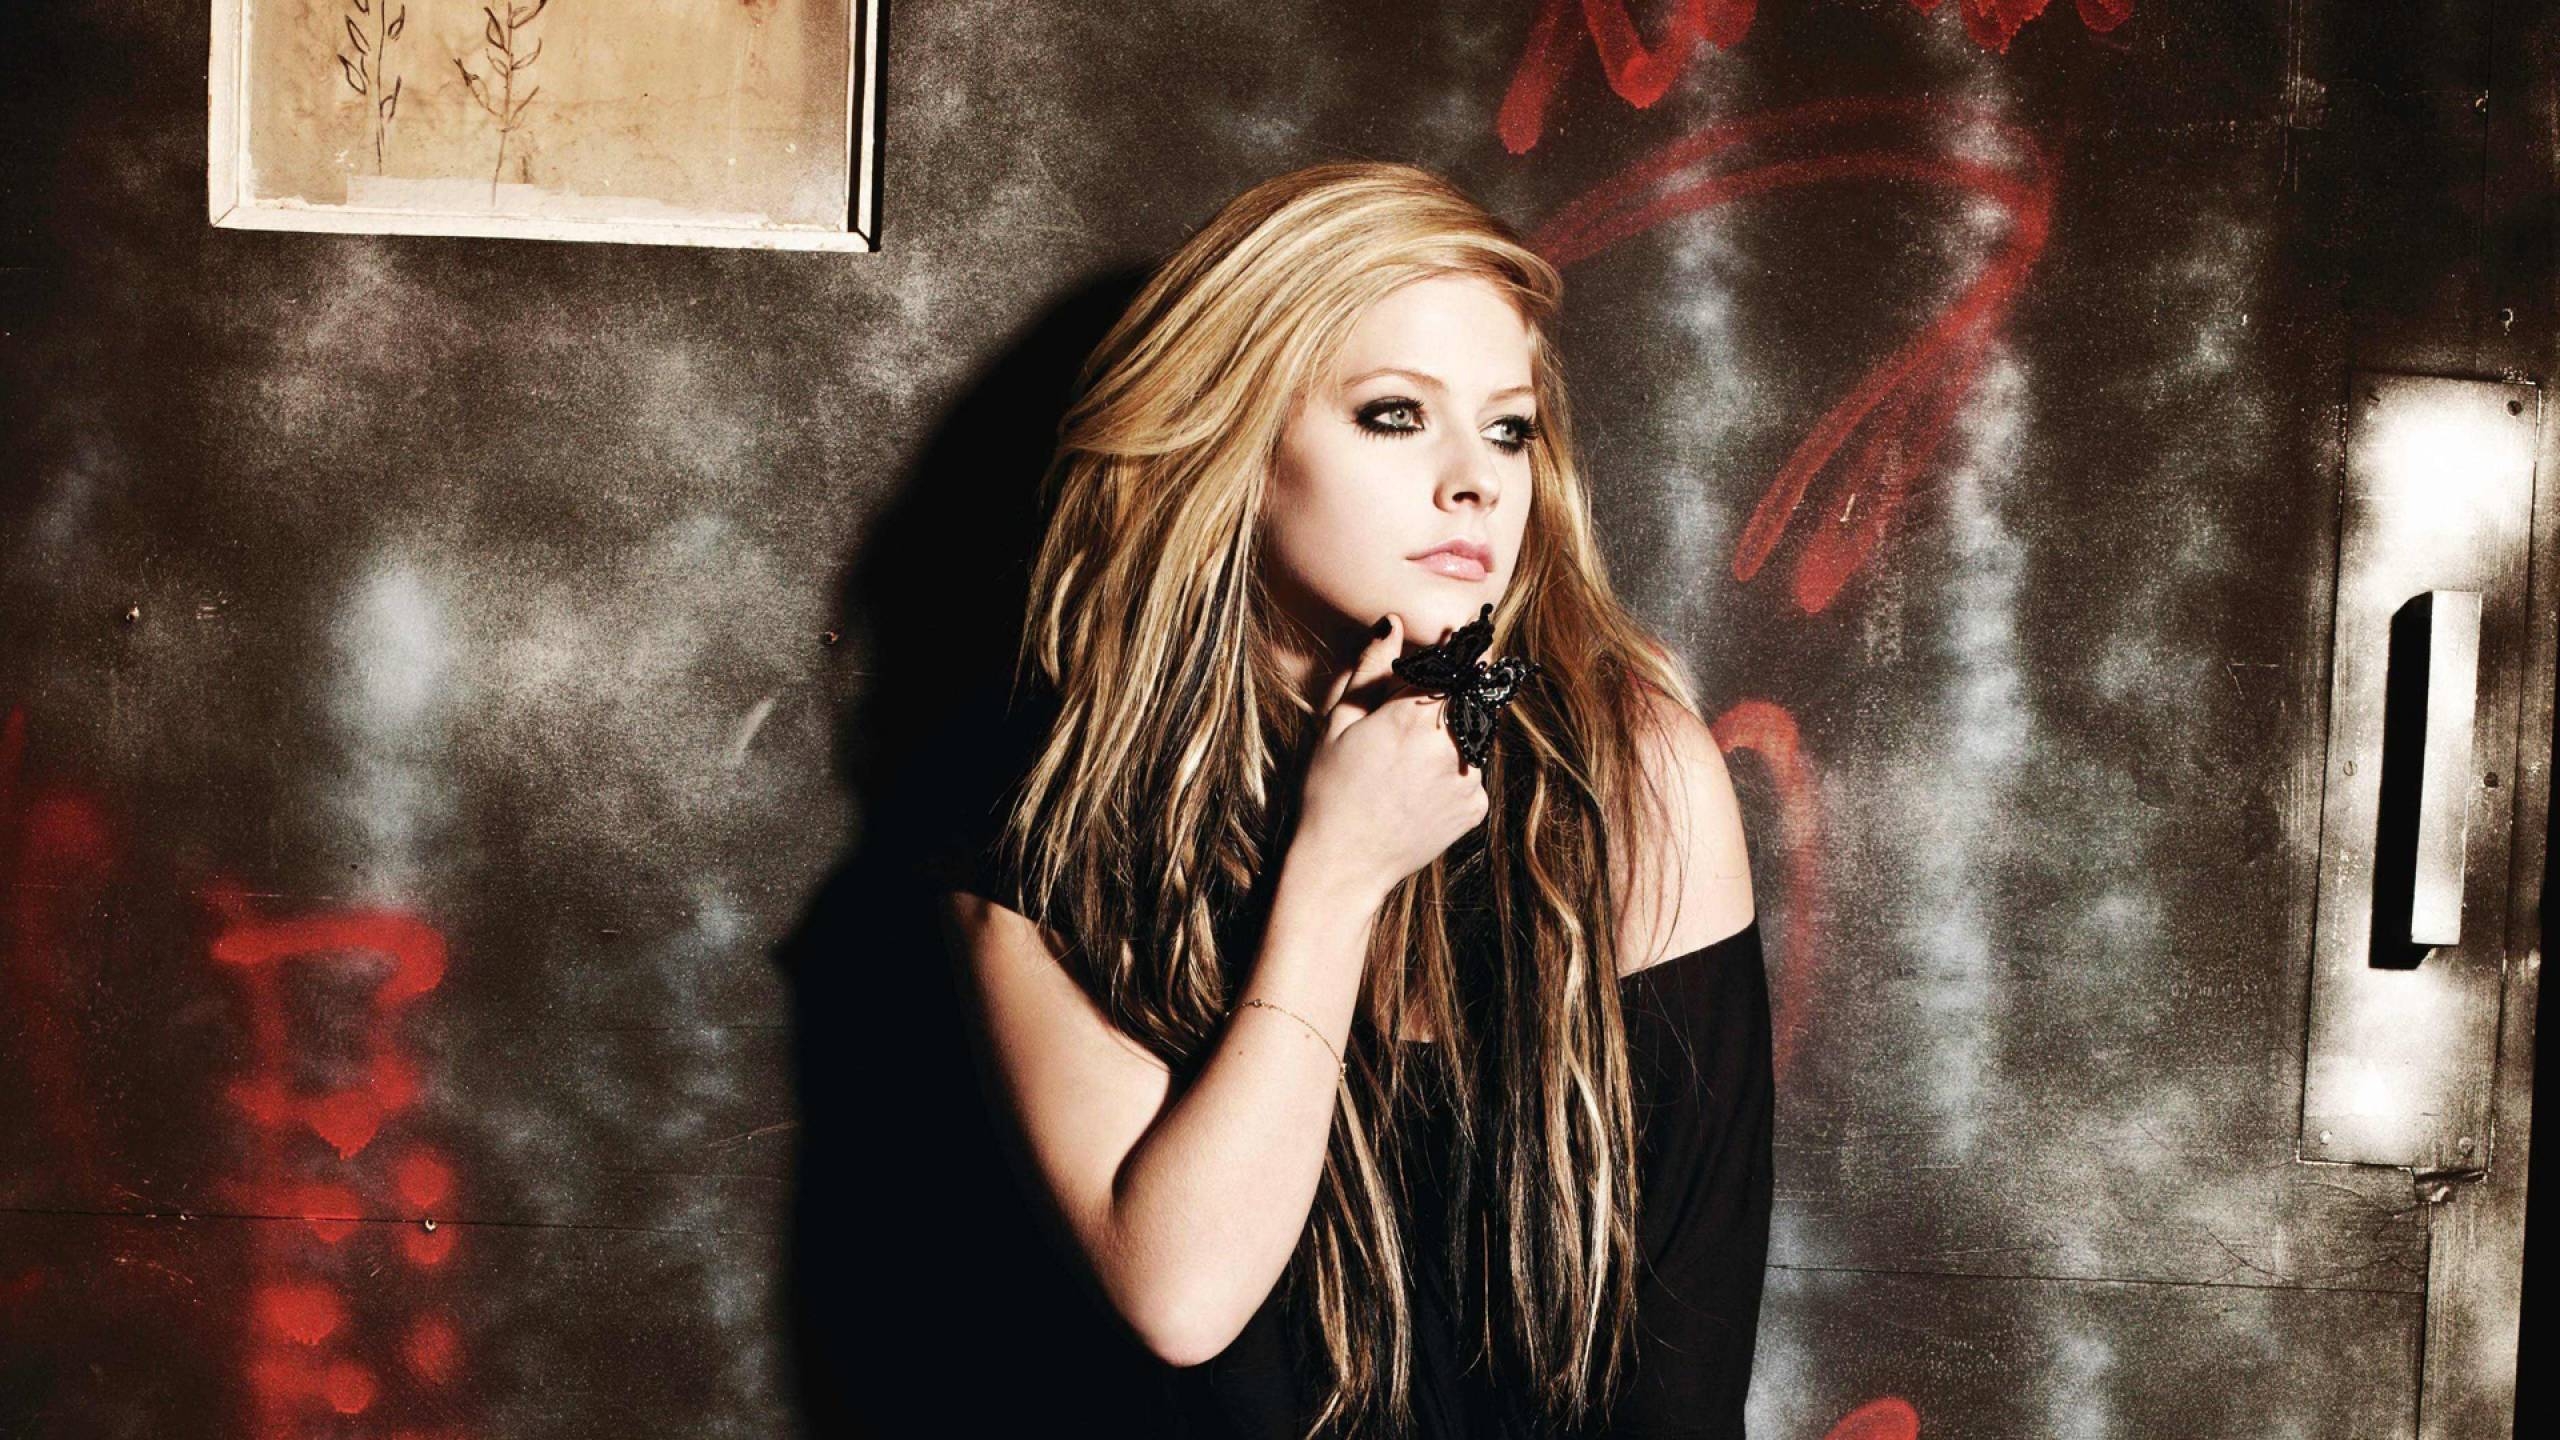 Avril Lavigne Butterfly for 2560x1440 HDTV resolution